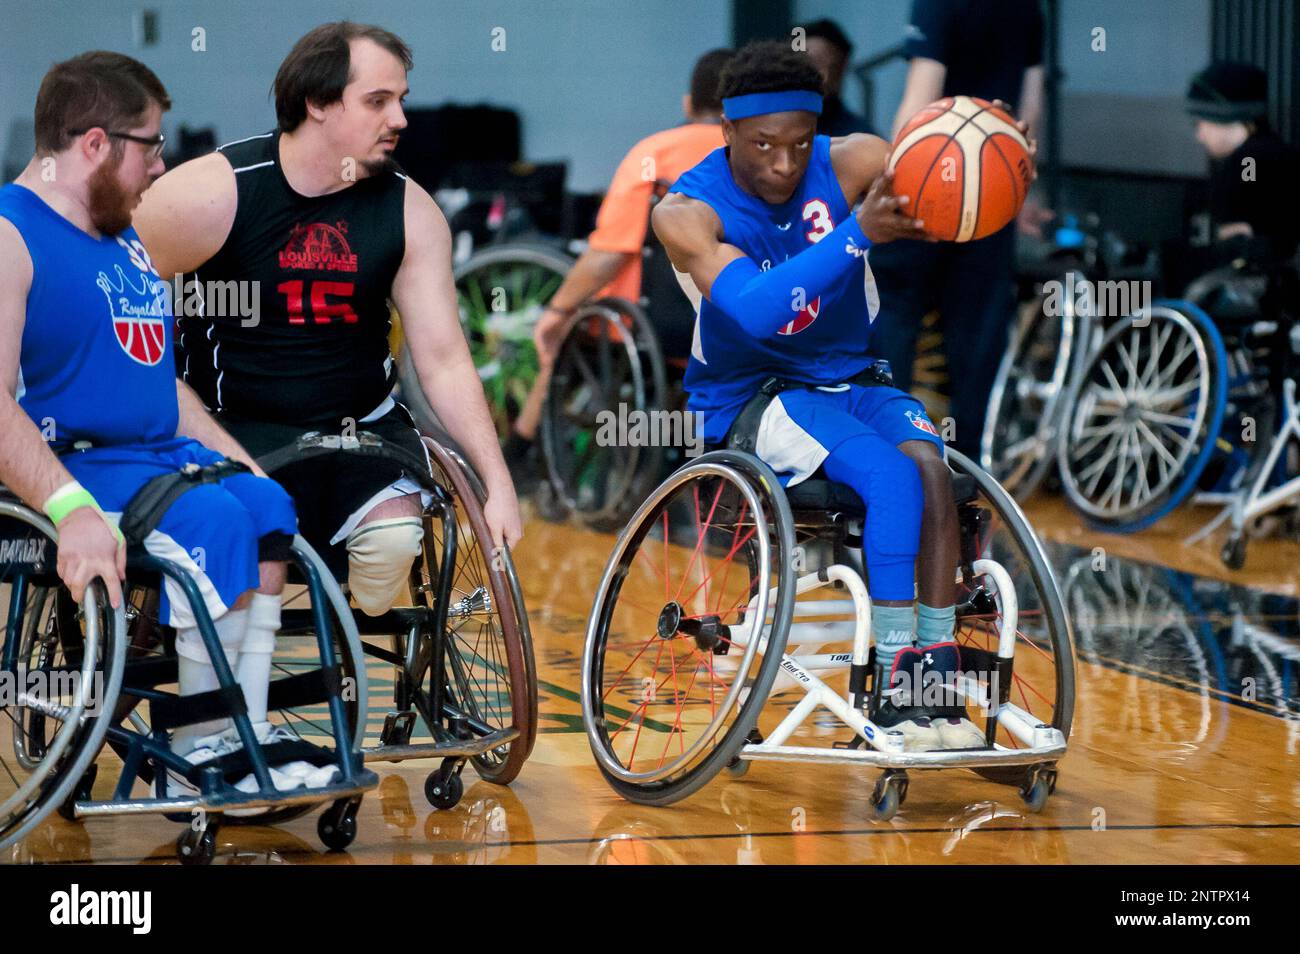 Cincinnati Royals Wheelchair Basketball Team